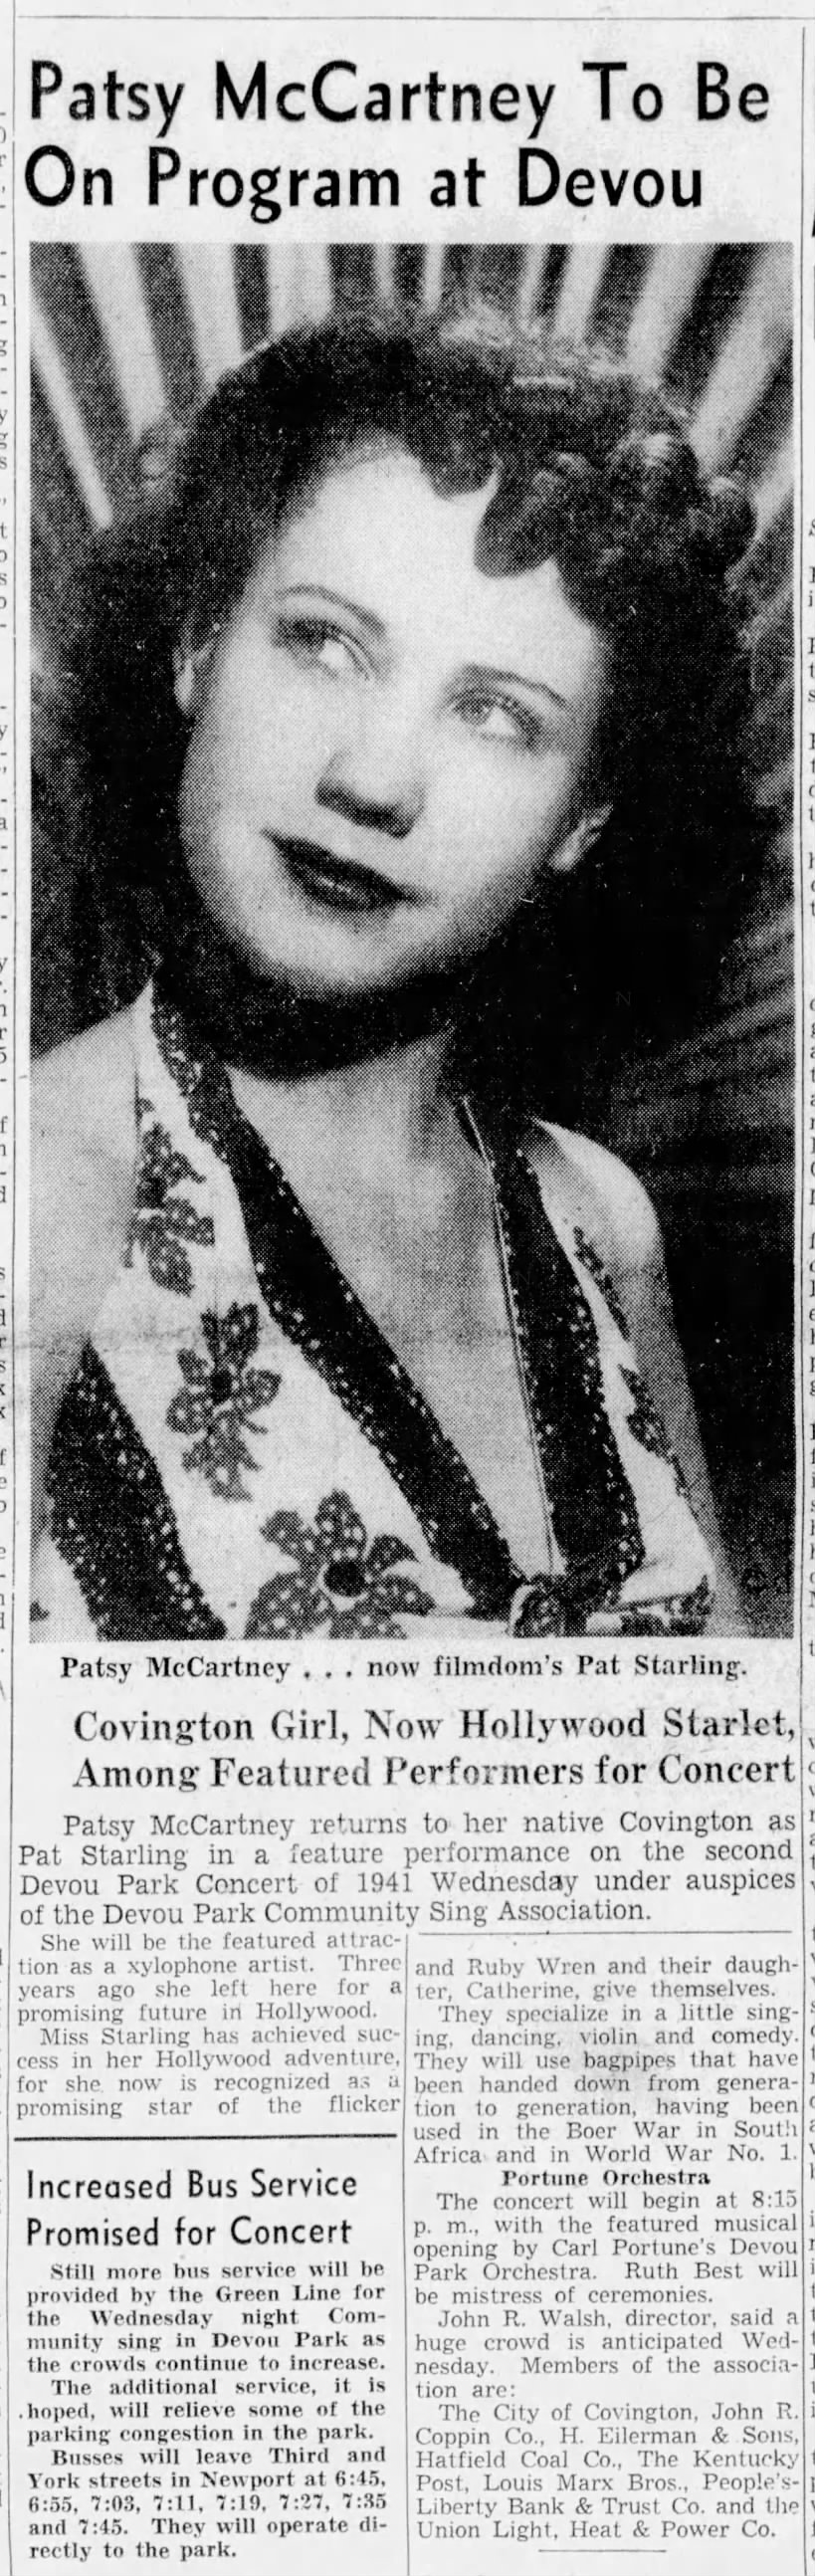 Hollywood's Pat Starling (Patsy McCartney) performing at 1941 concert at Devou Park.